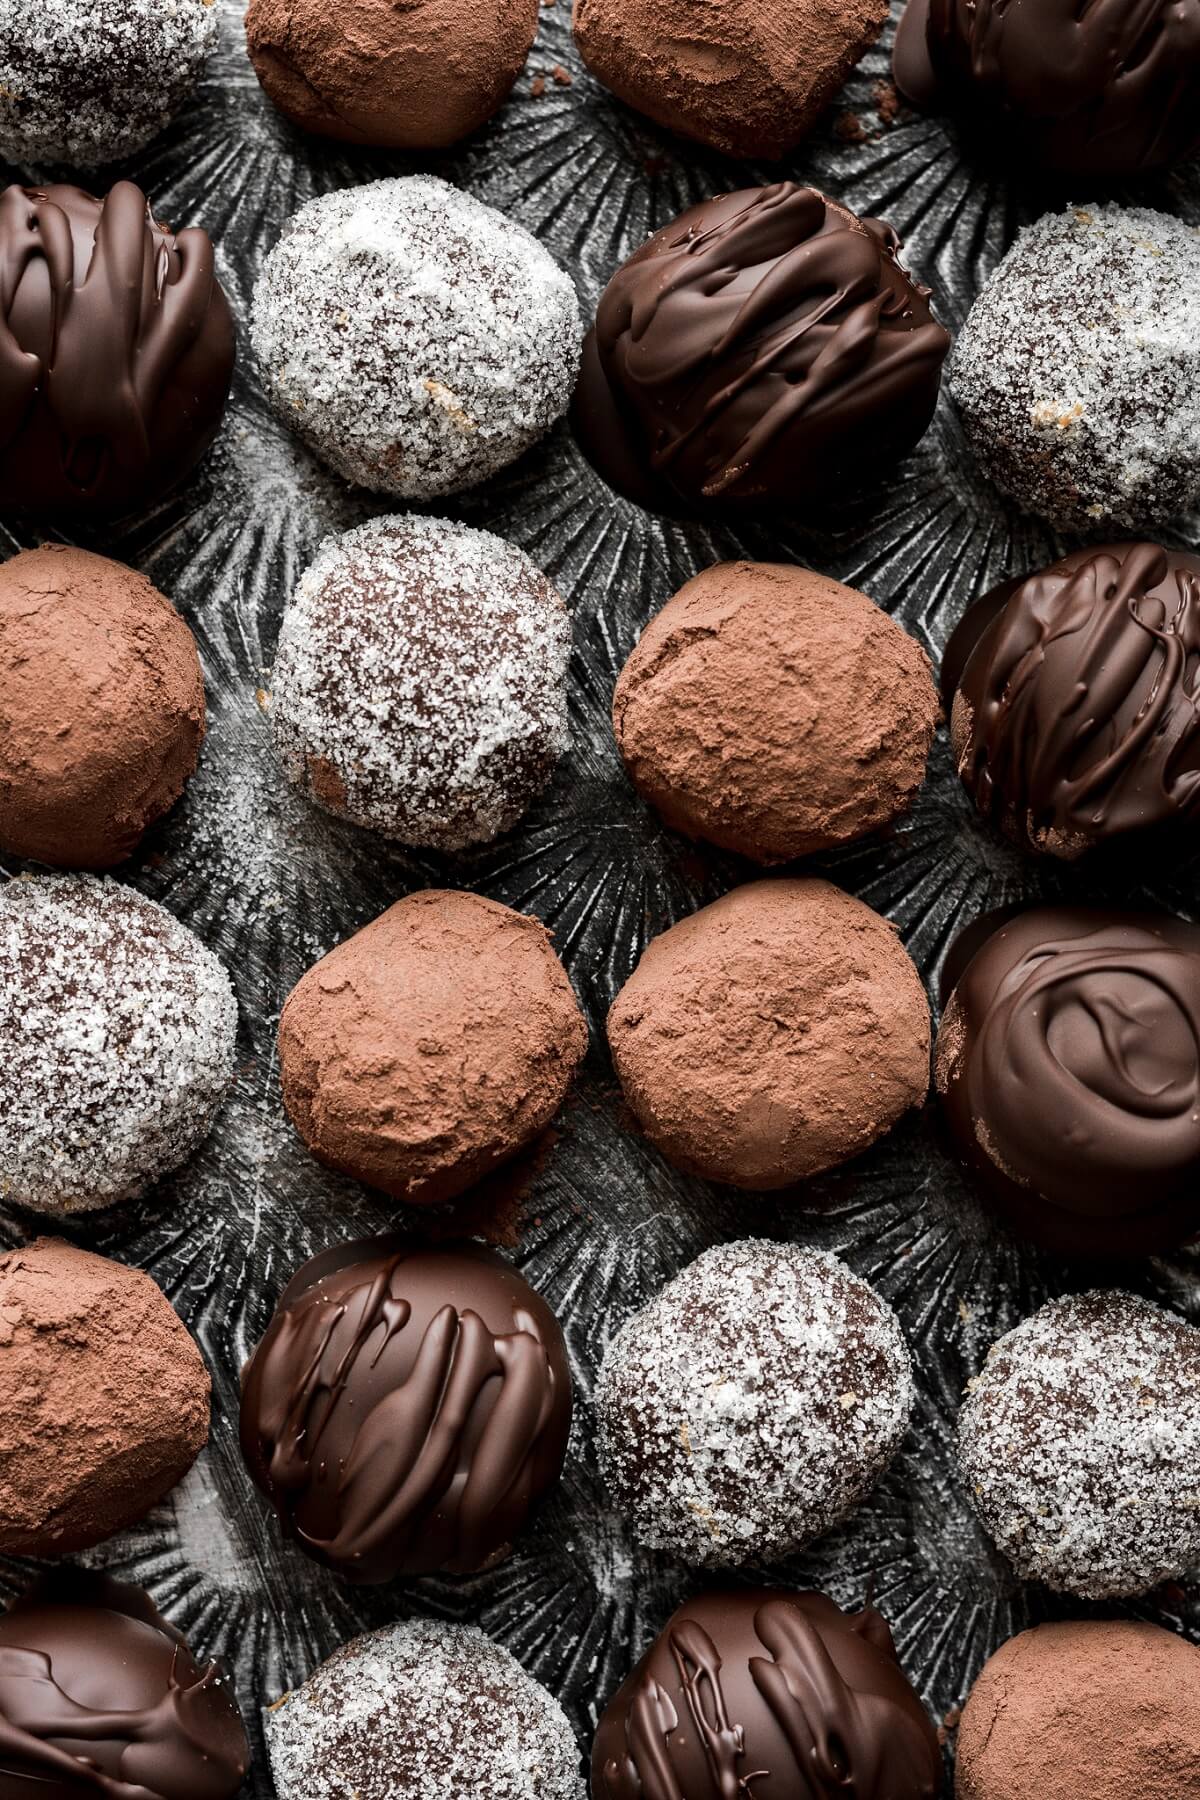 Chocolate truffles with cocoa powder, orange sugar and chocolate coating.